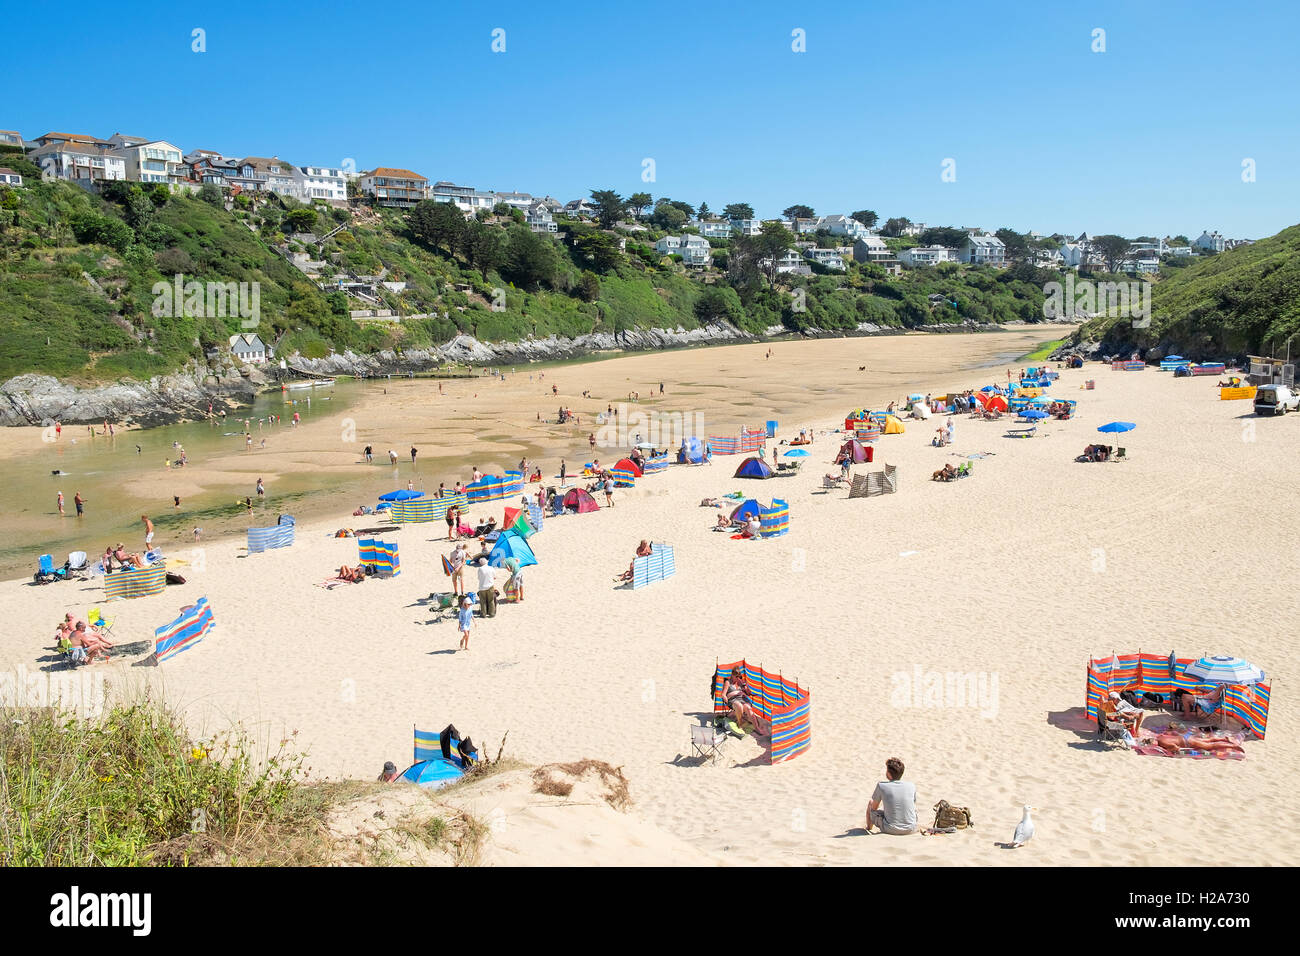 The beach at Crantock in Cornwall, England, UK Stock Photo